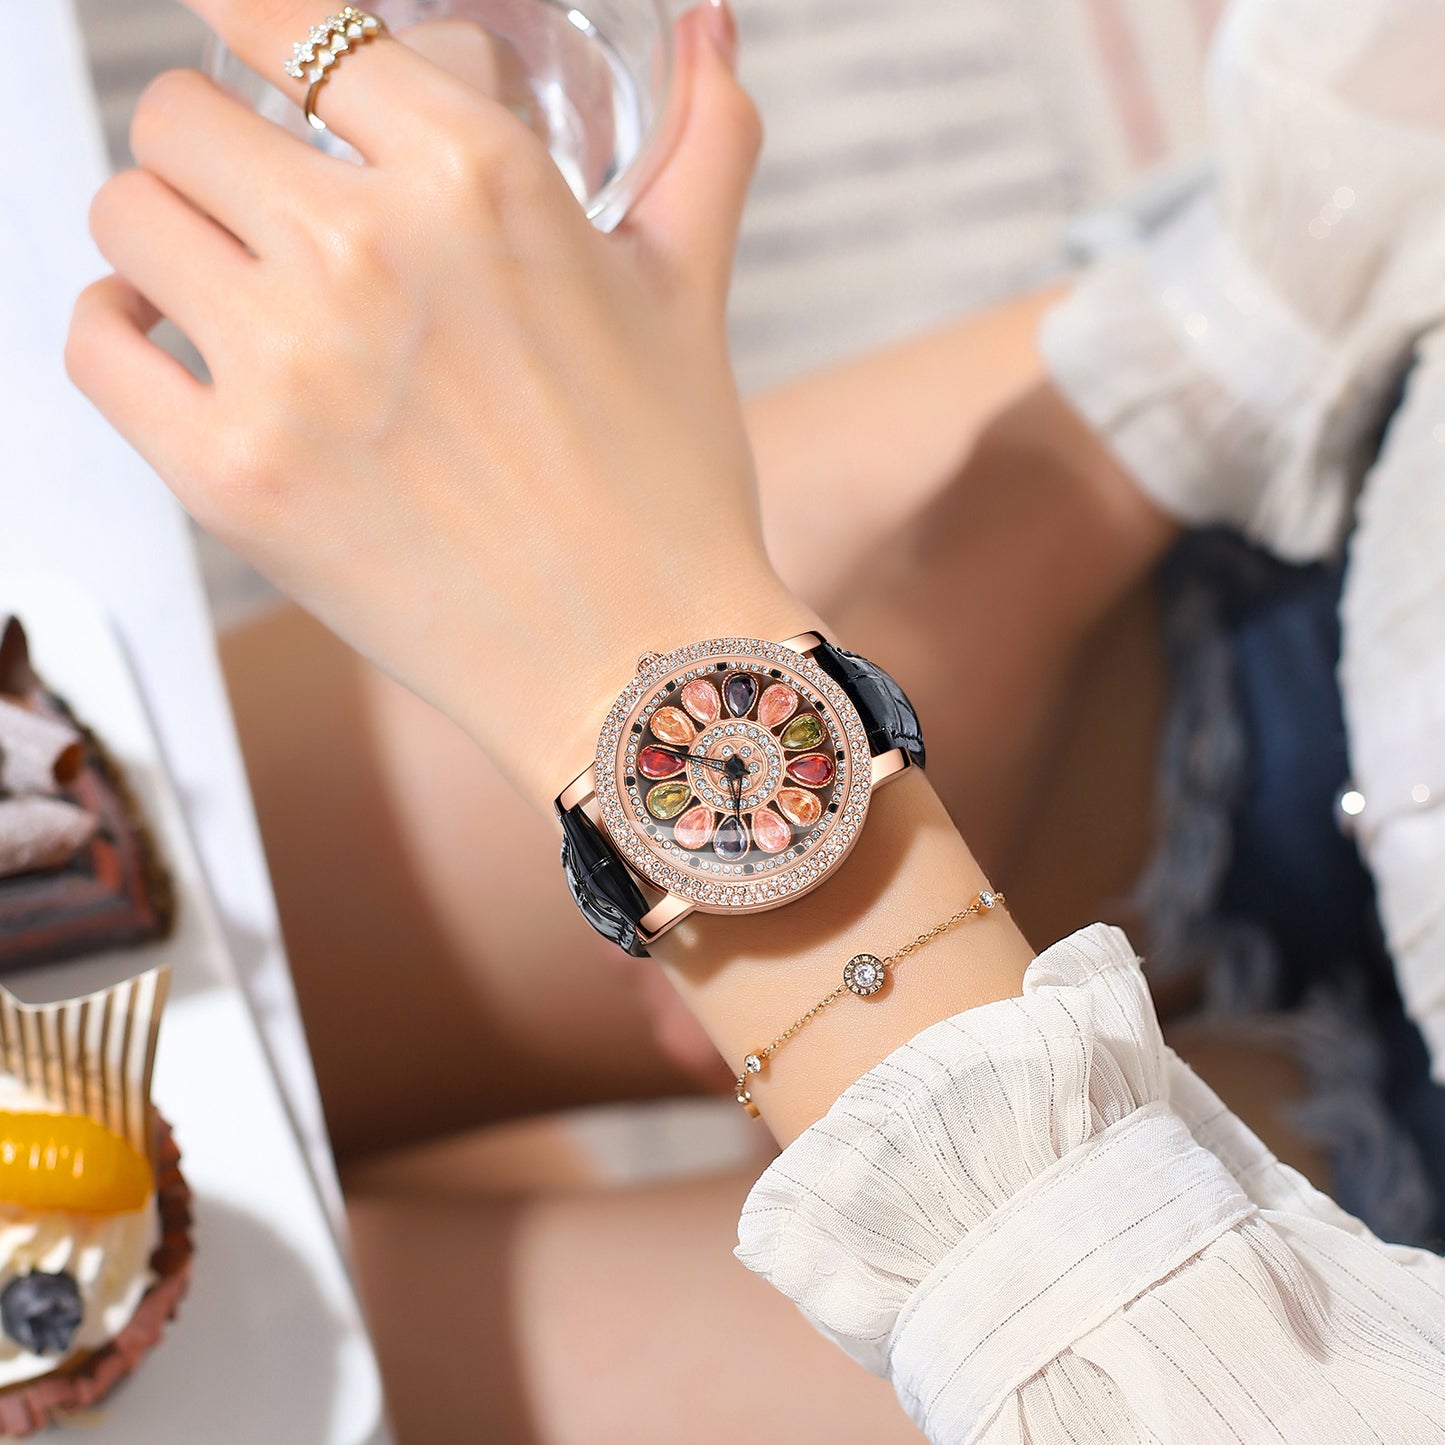 Diamond Inlaid, fashionable and trendy watch